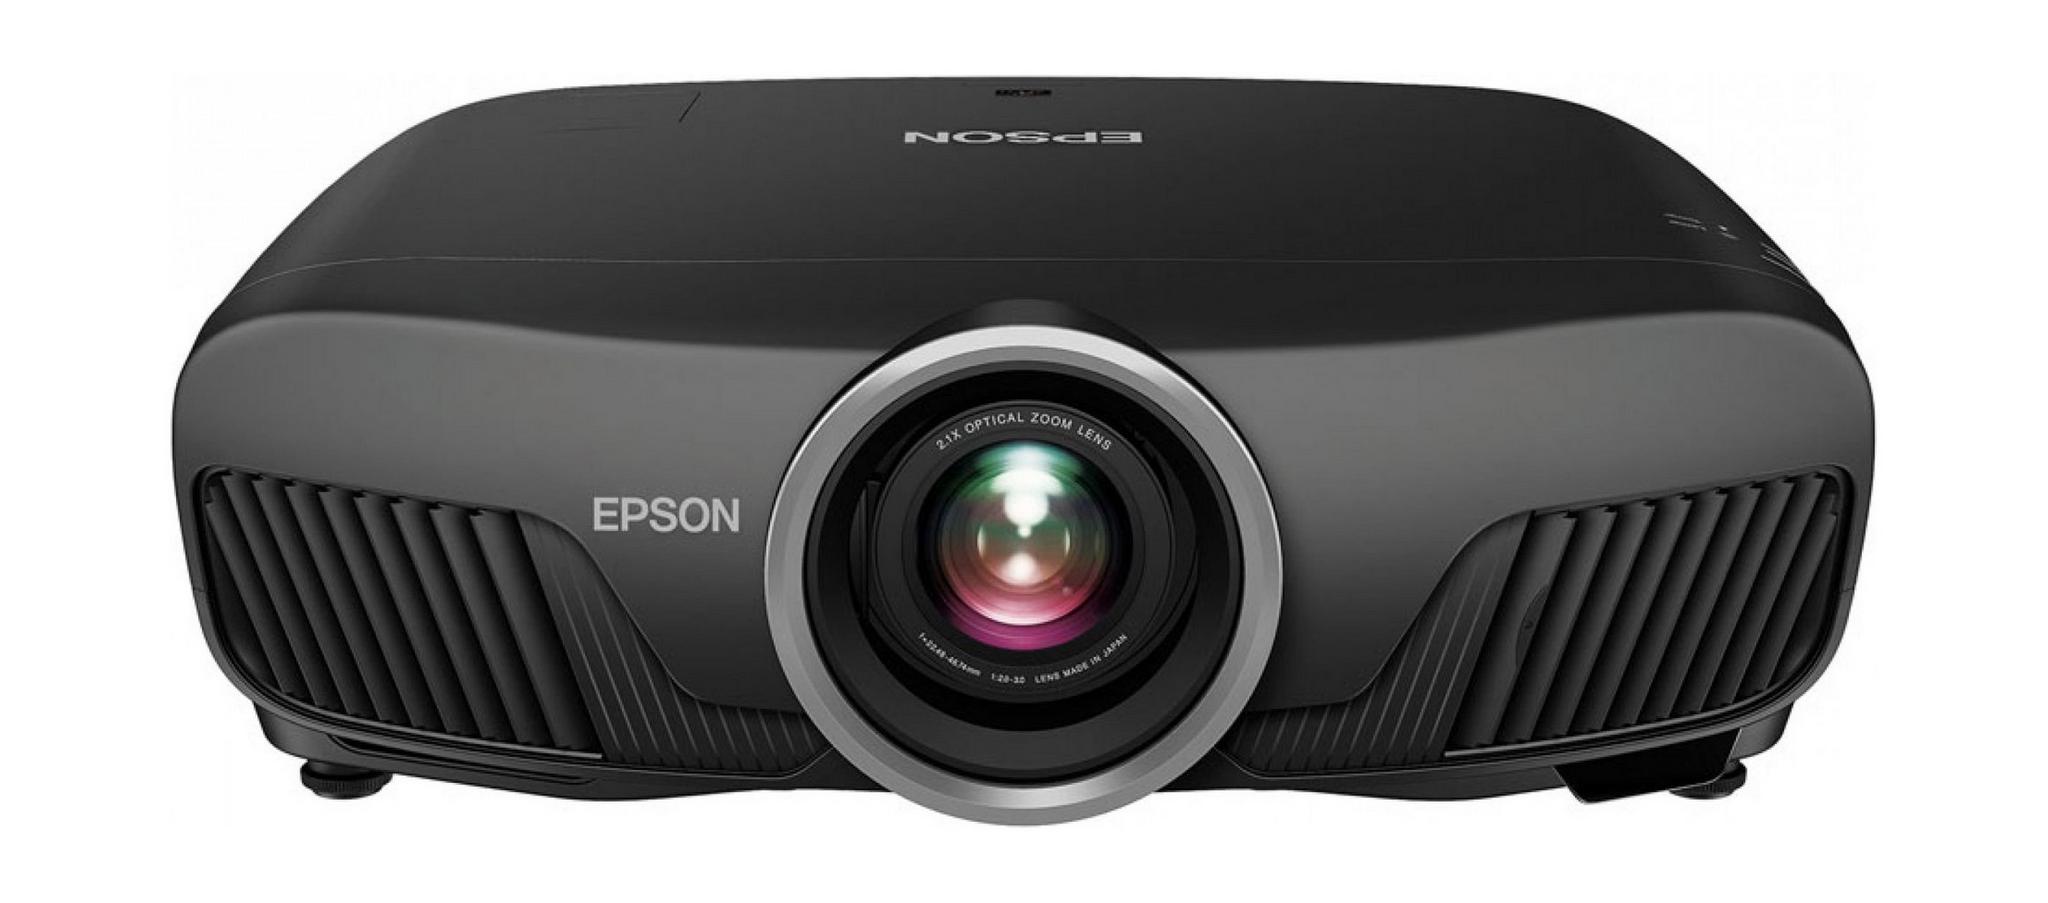 Epson 4K 3D 3LCD FHD Home Cinema Projector (TW-9300) - Black